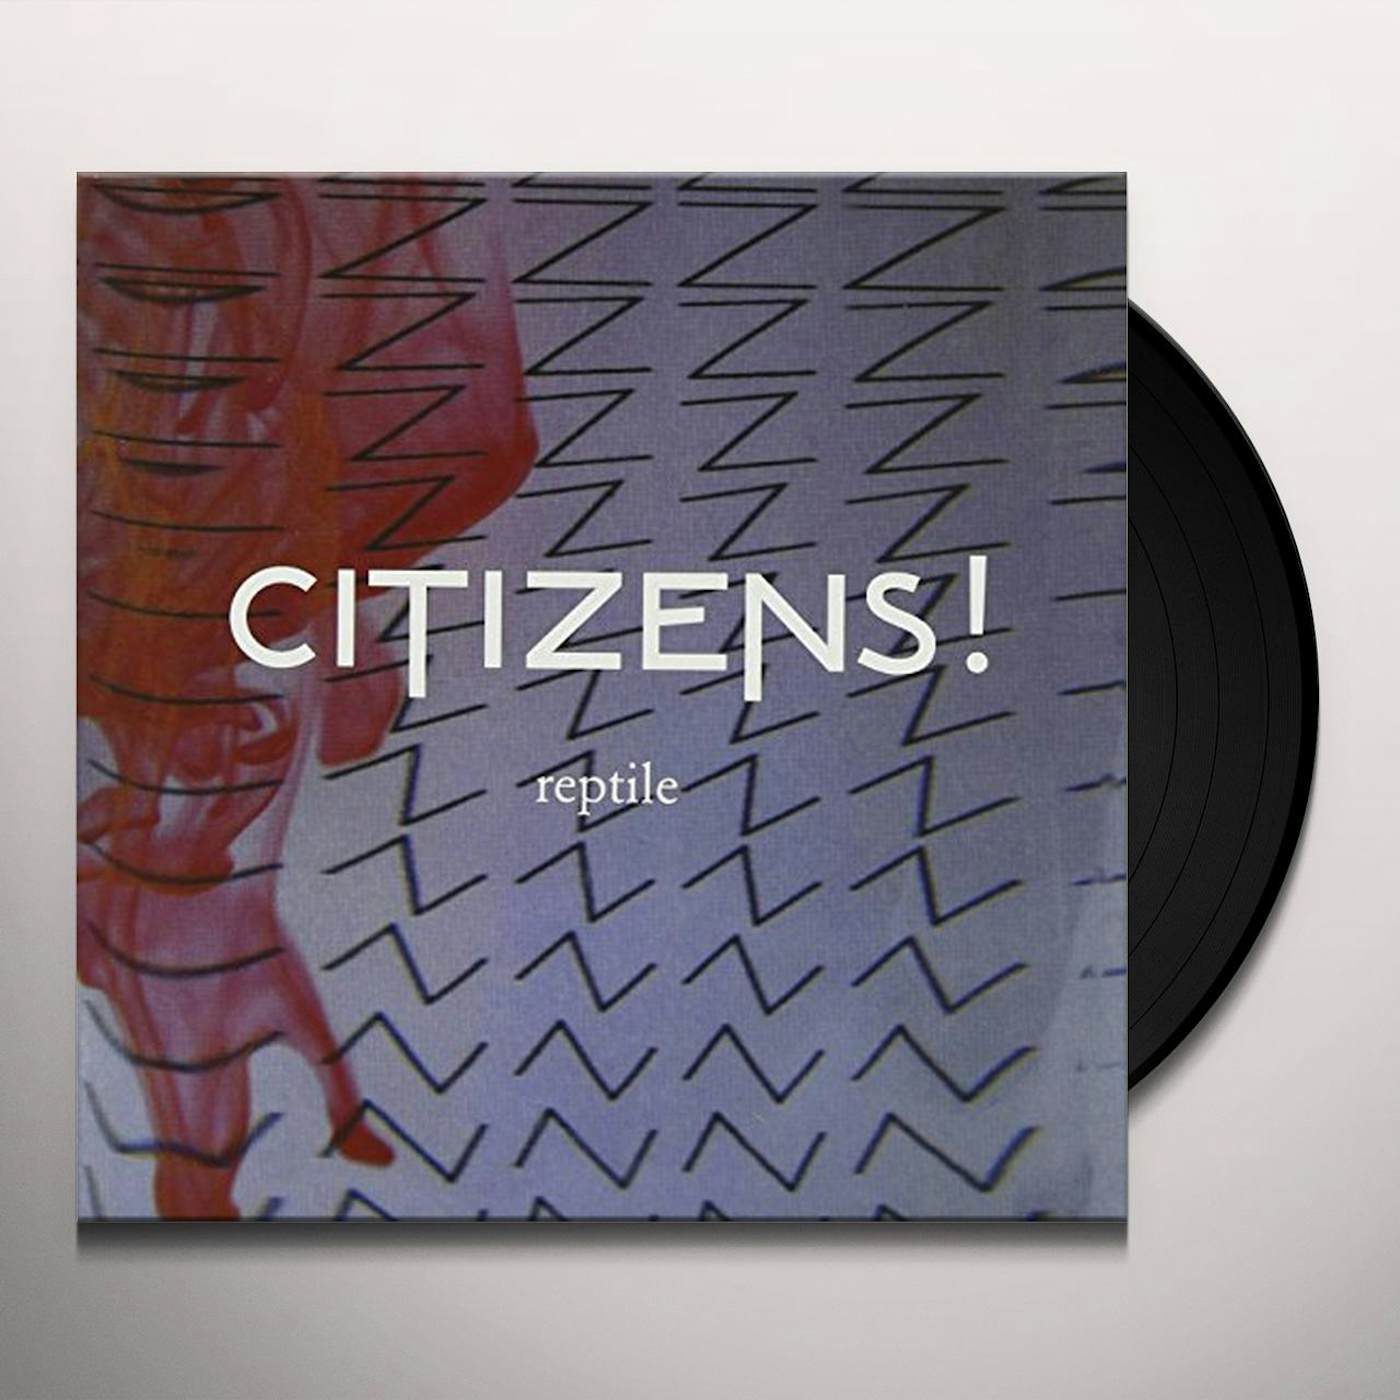 Citizens! Reptile Vinyl Record